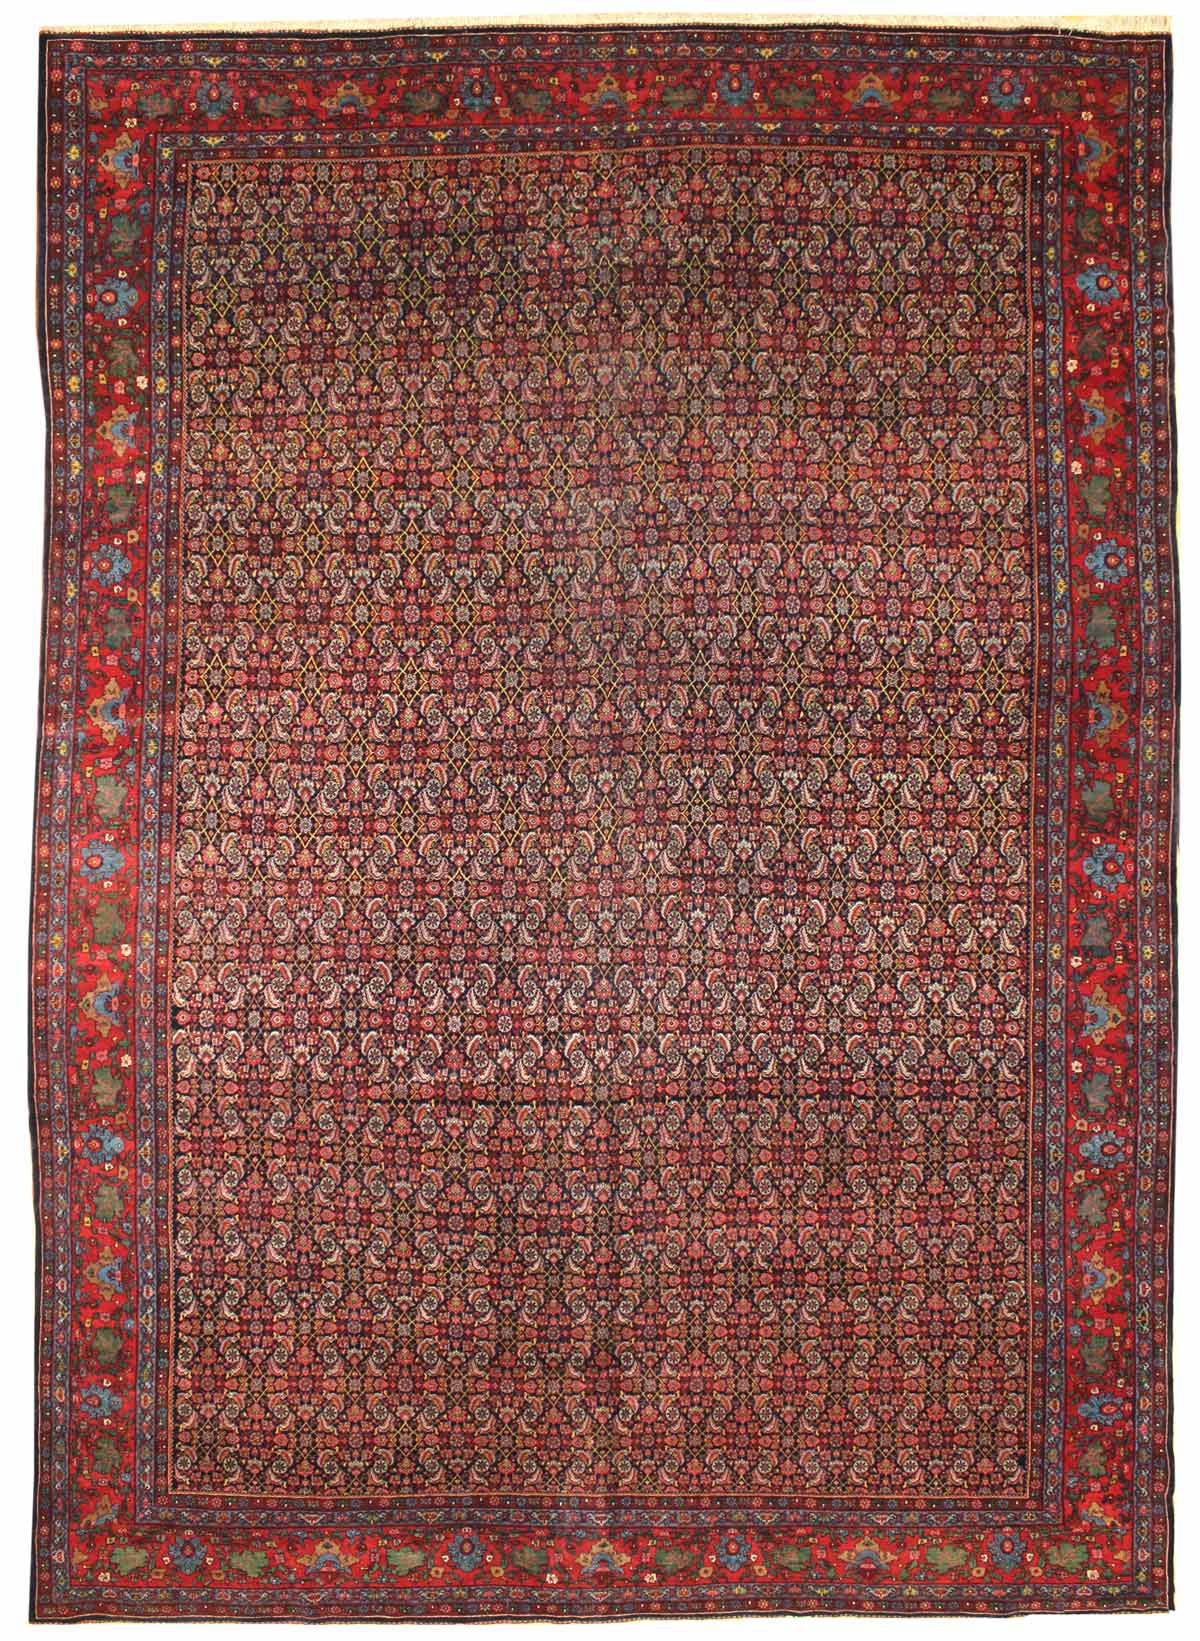 Antique Herati Handwoven Traditional Rug